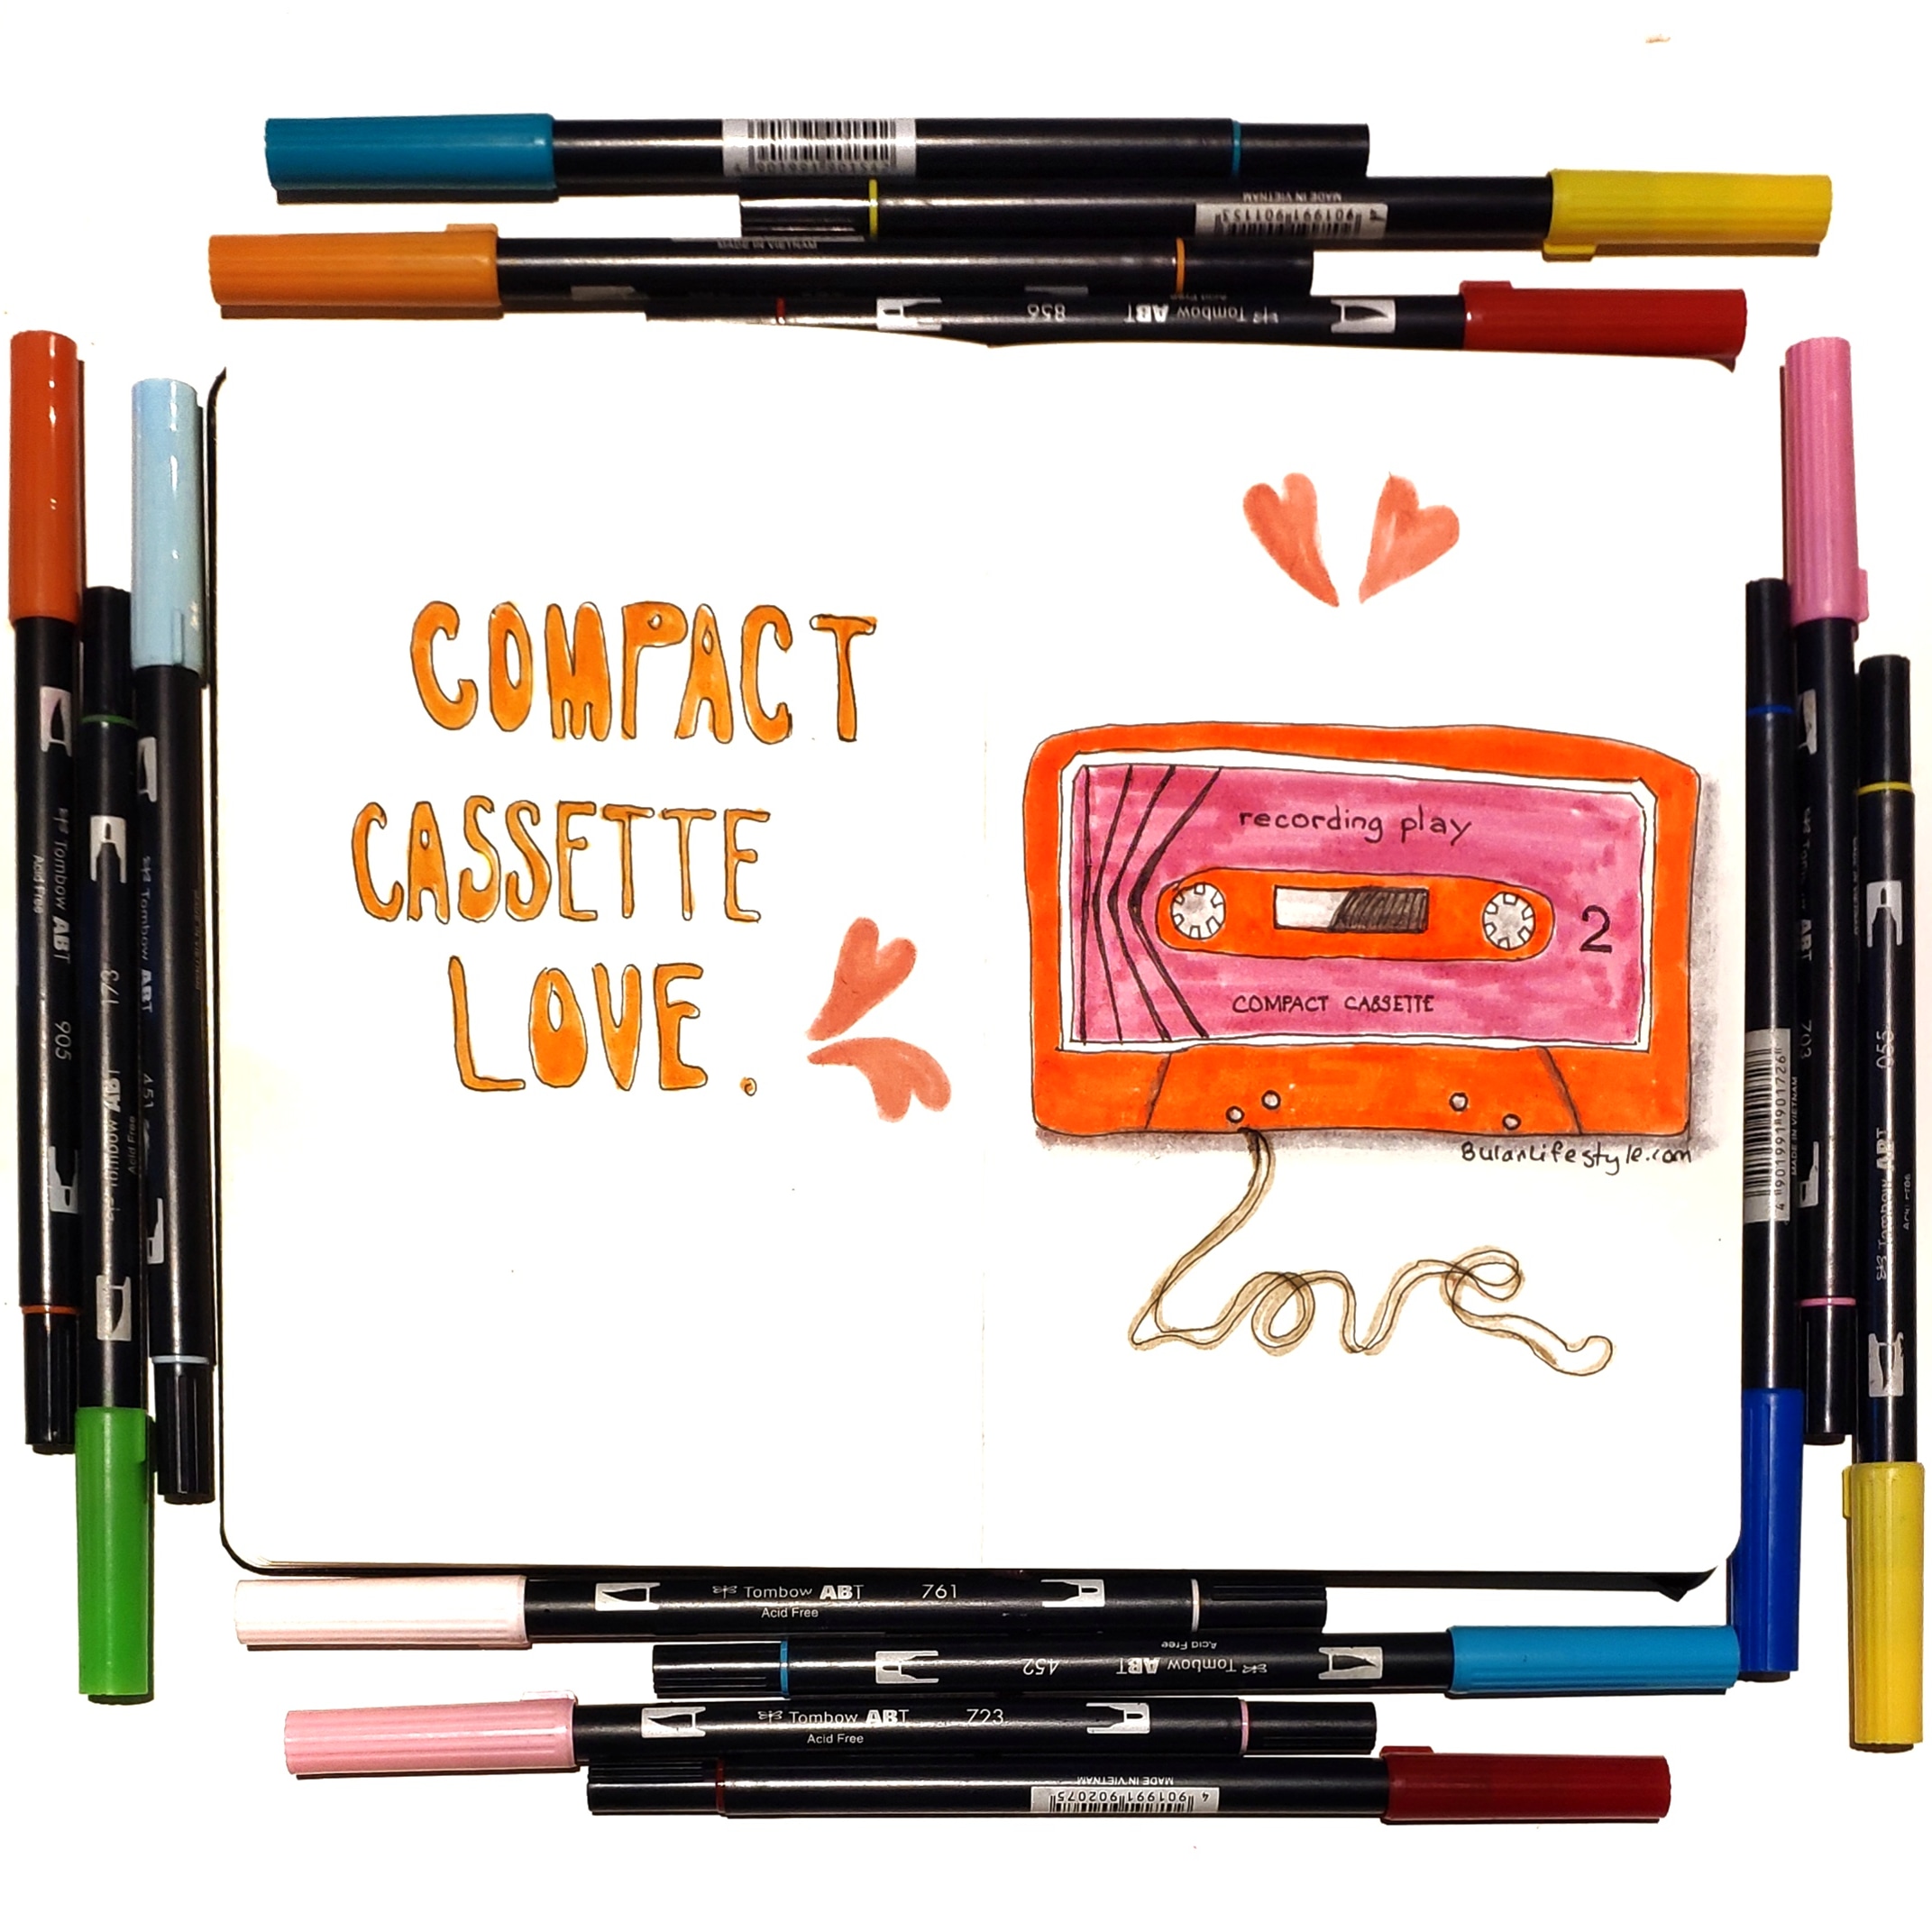 Compact cassette love